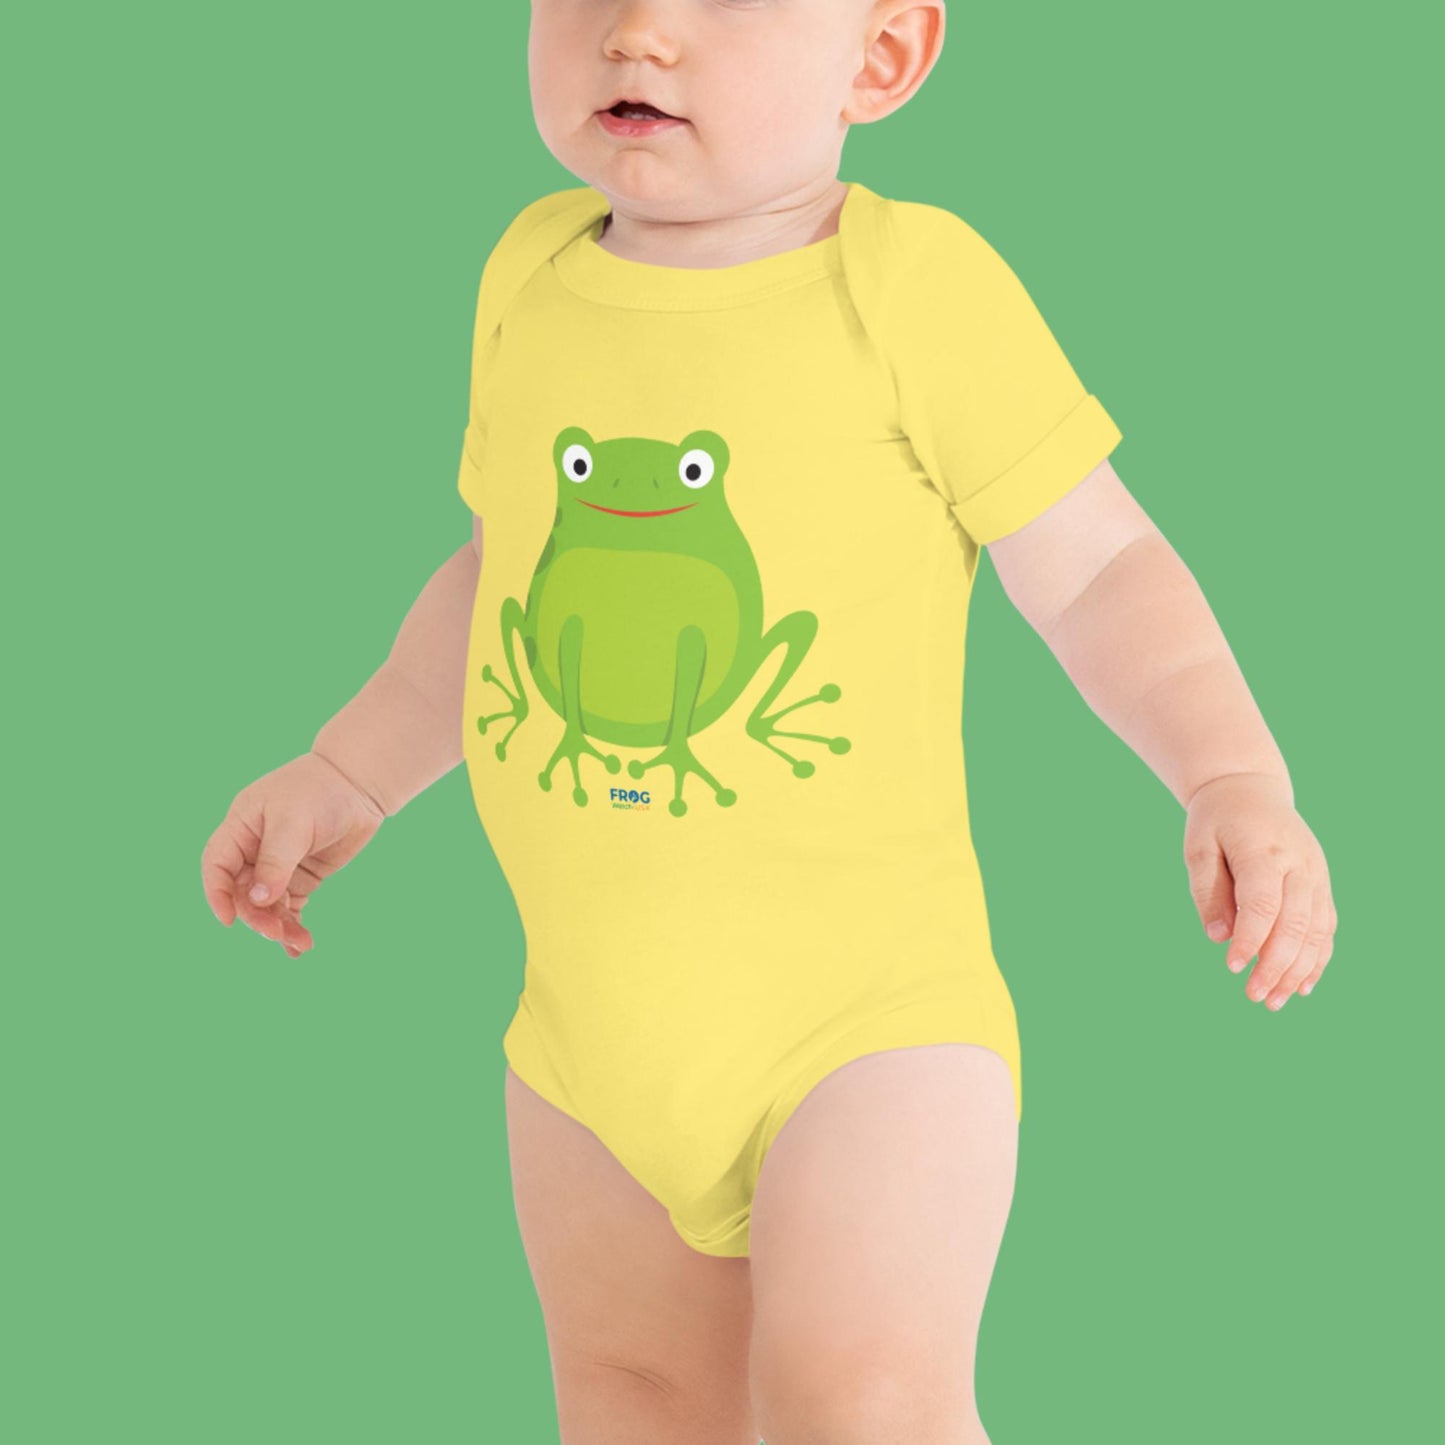 Big Happy Frog - Baby one piece